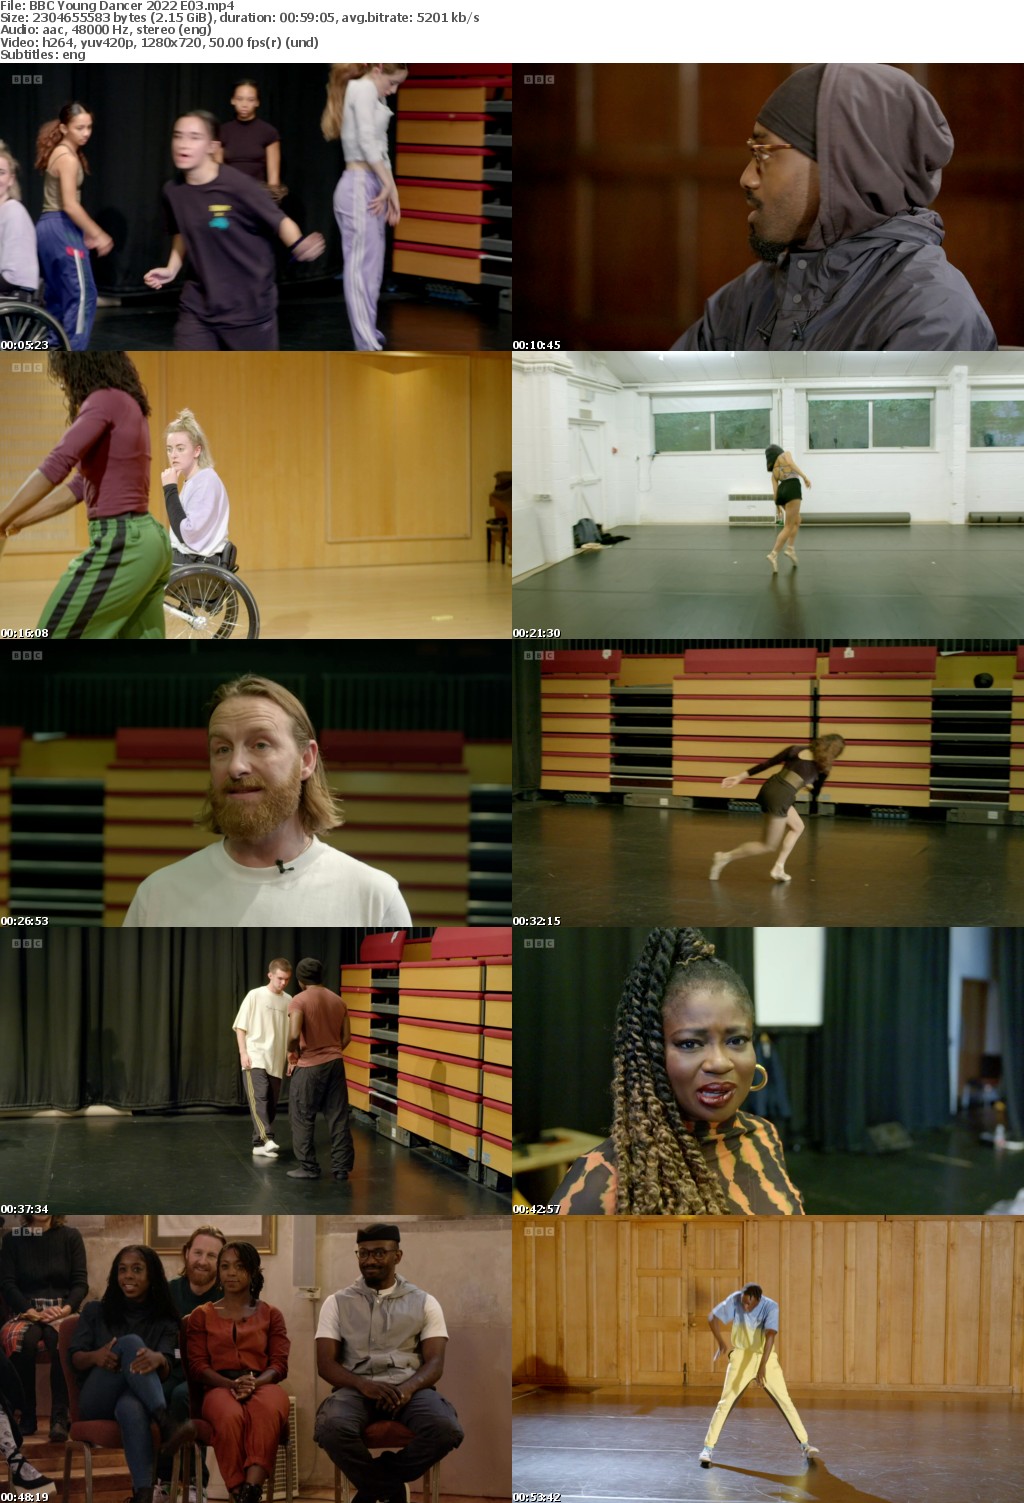 BBC Young Dancer 2022 E03 (1280x720p HD, 50fps, soft Eng subs)